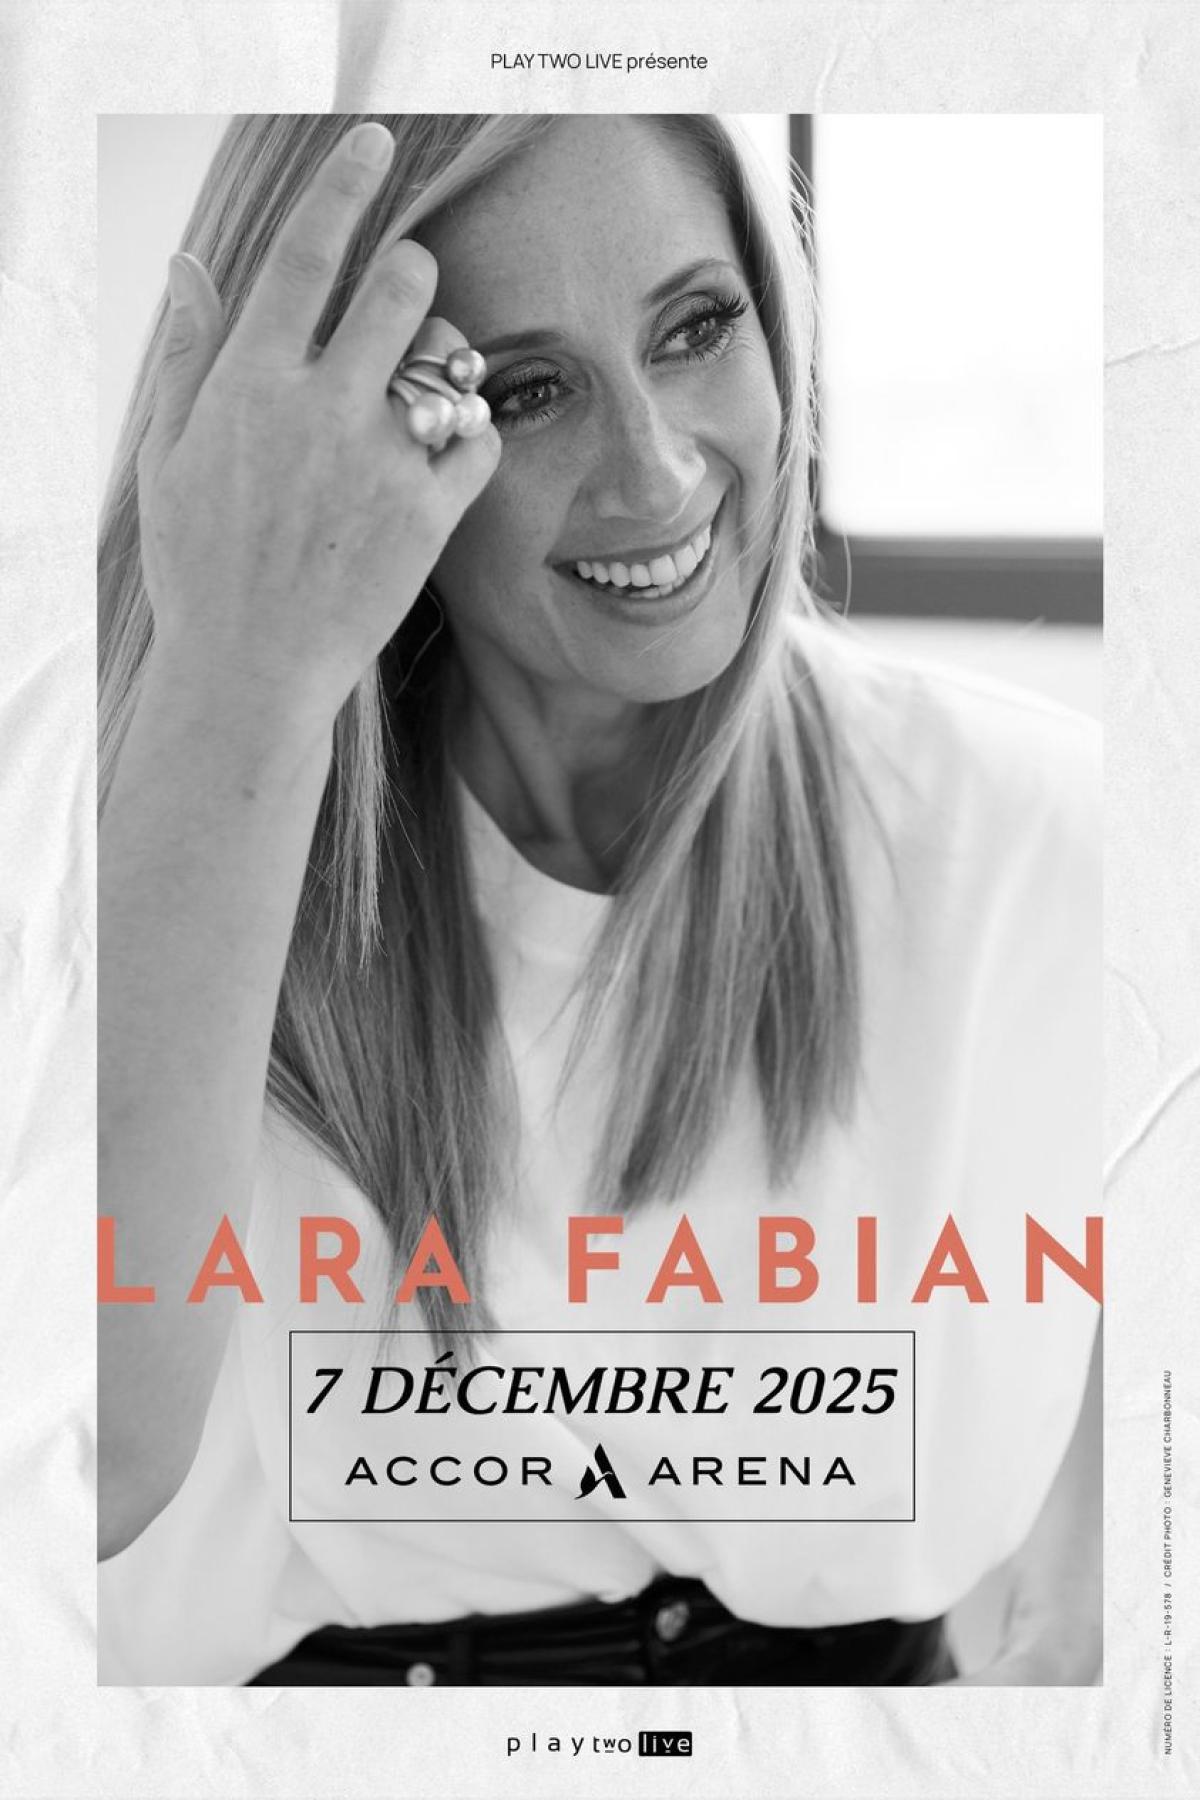 Lara Fabian in der Accor Arena Tickets